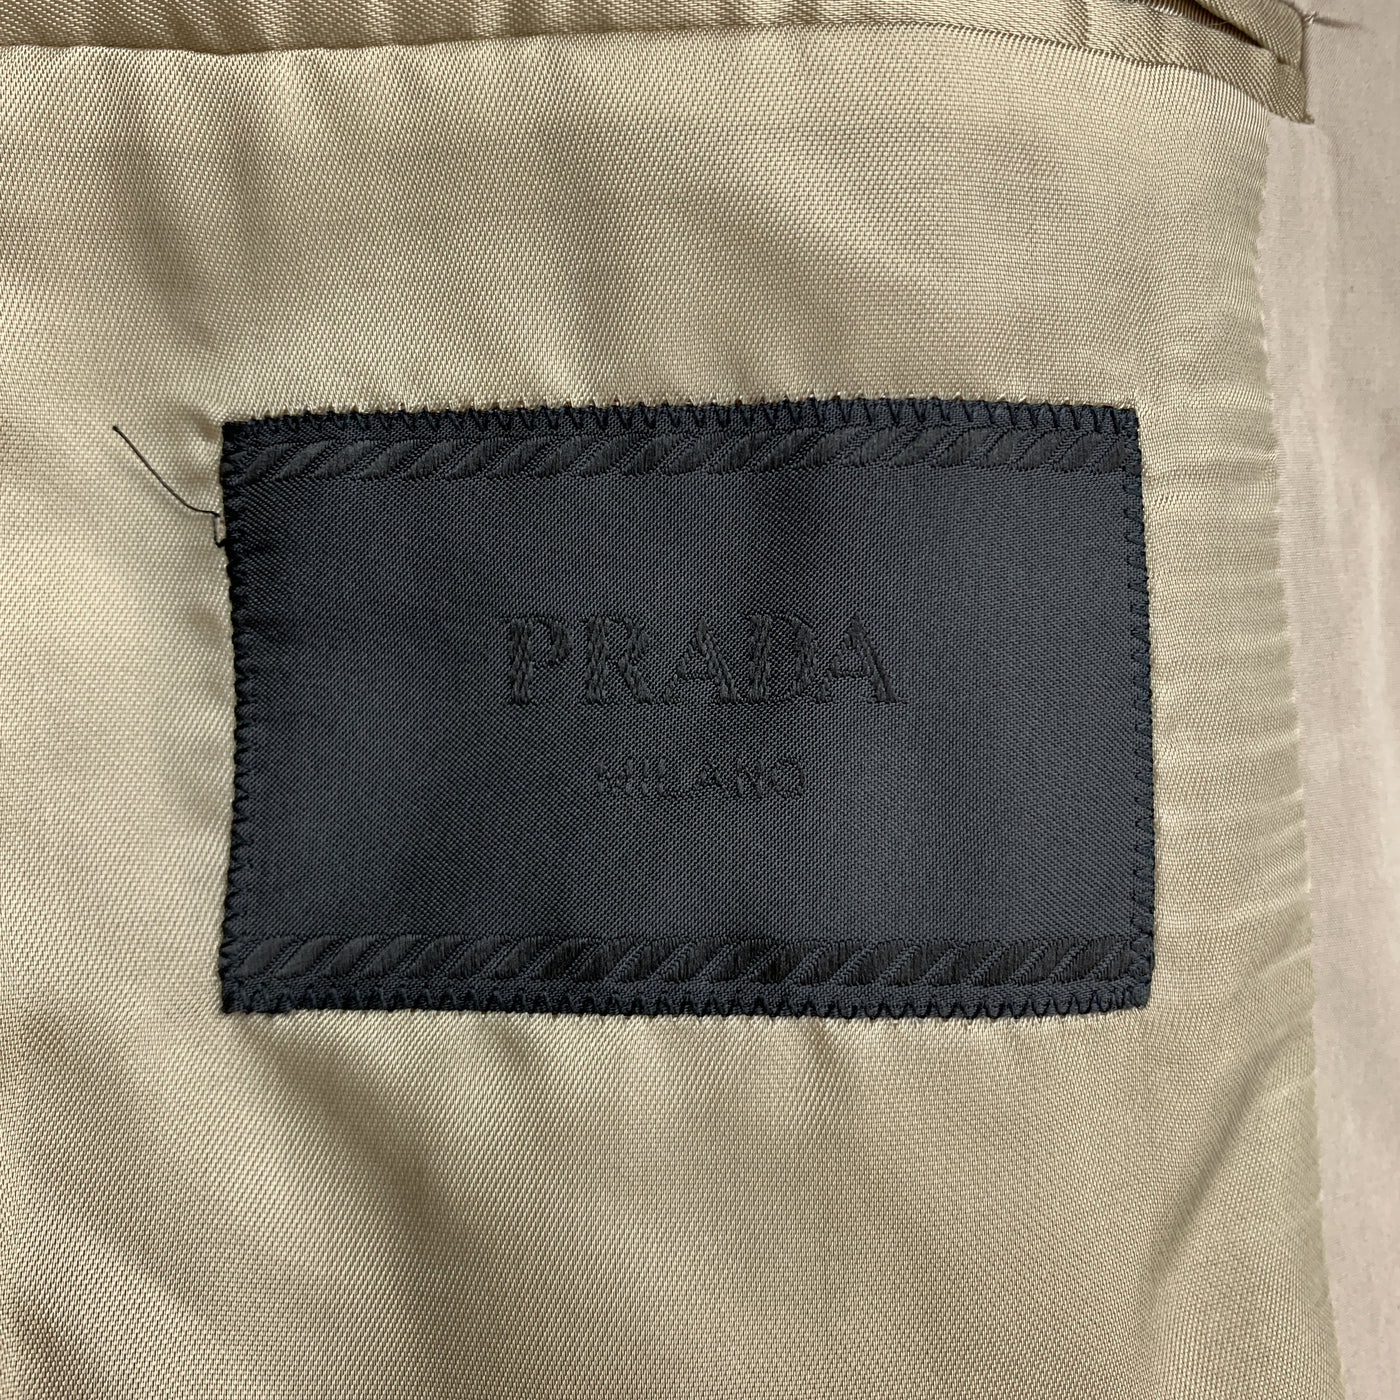 PRADA Size 38 Khaki Beige Cotton Blend Notch Lapel Sport Coat